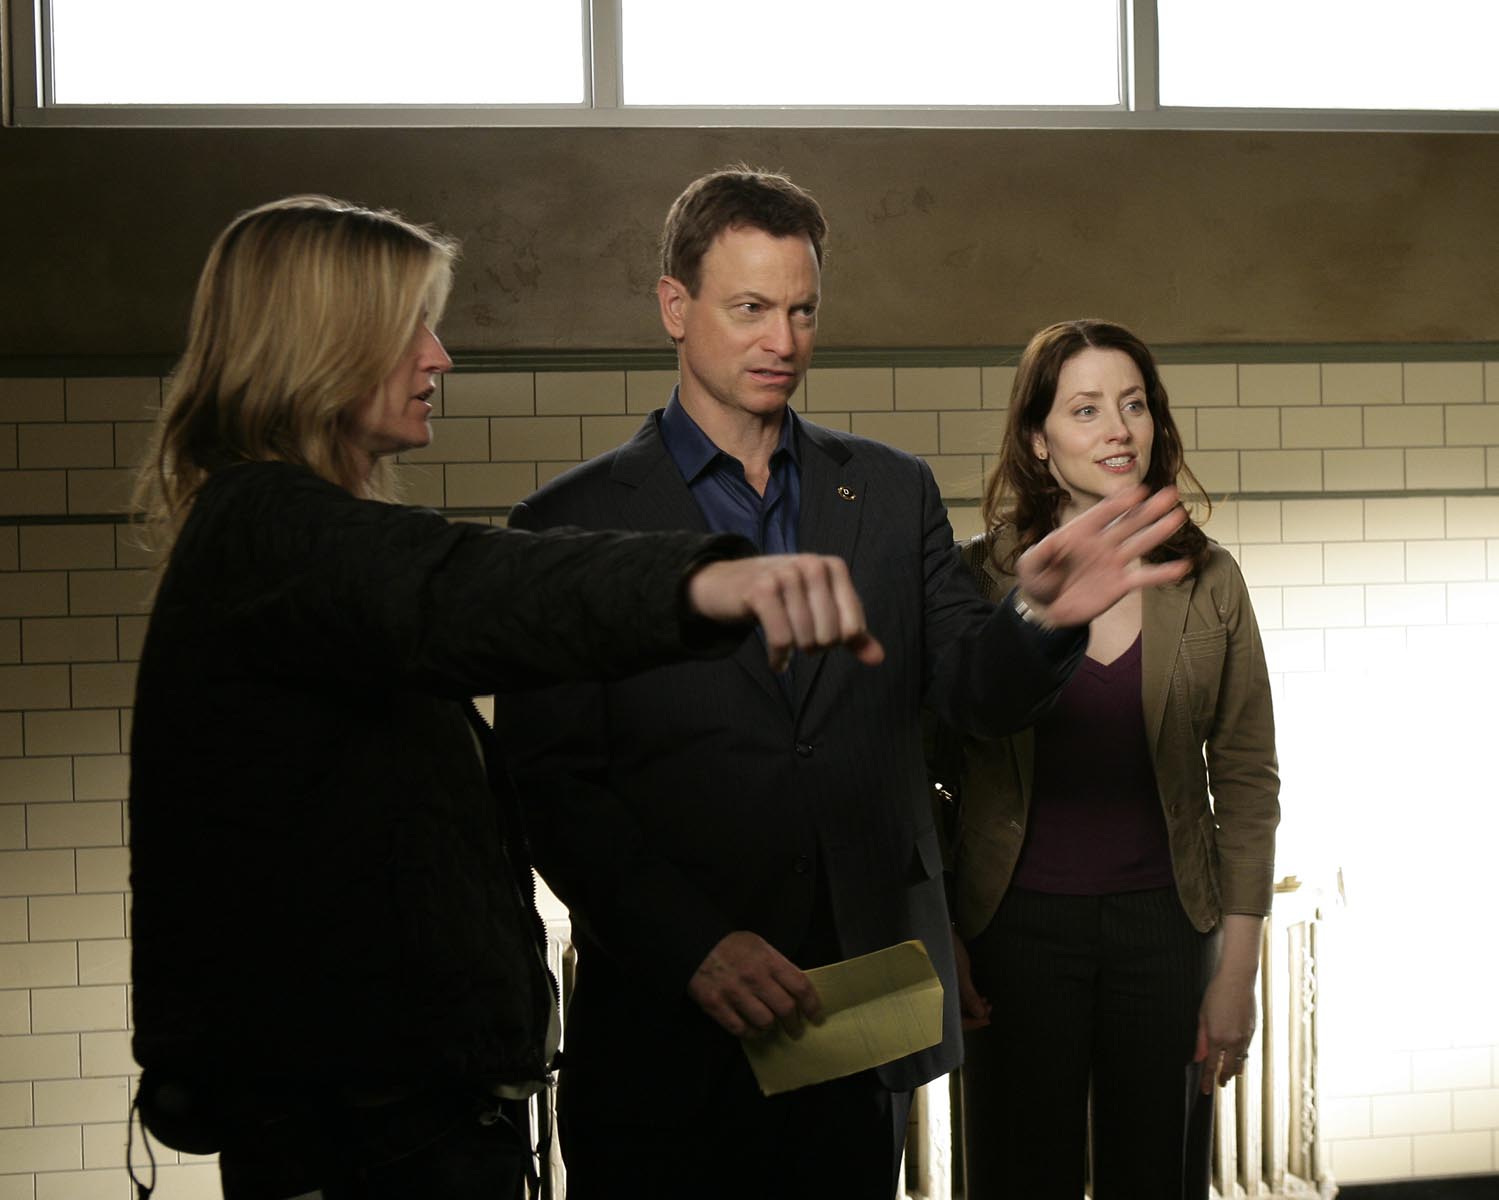 Gary Sinise & Heidi Schooler on the set of CSI-NY, in episode 